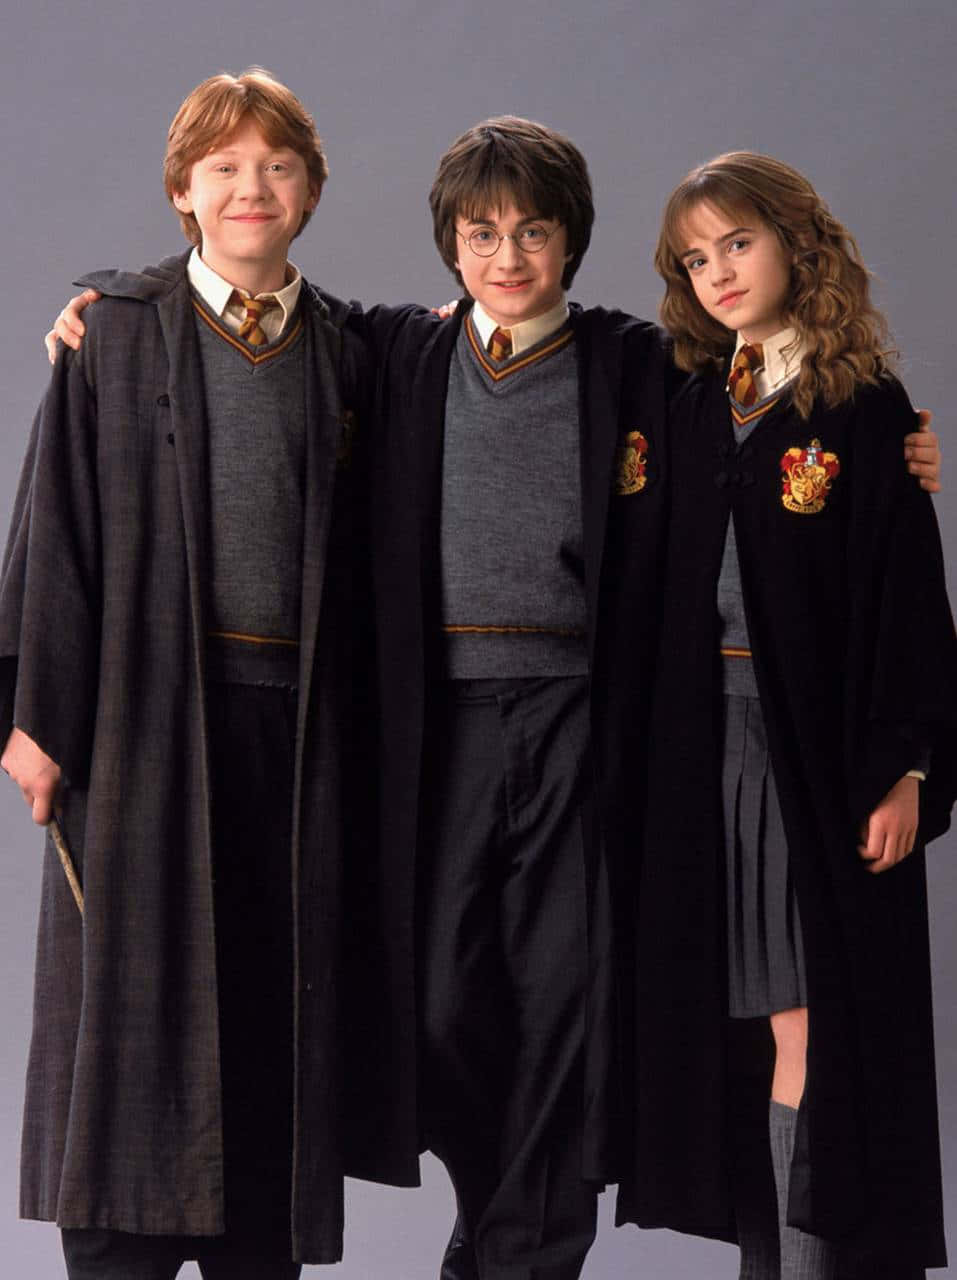 Harrypotter, Hermione Granger E Ron Weasley - O Trio De Ouro. Papel de Parede